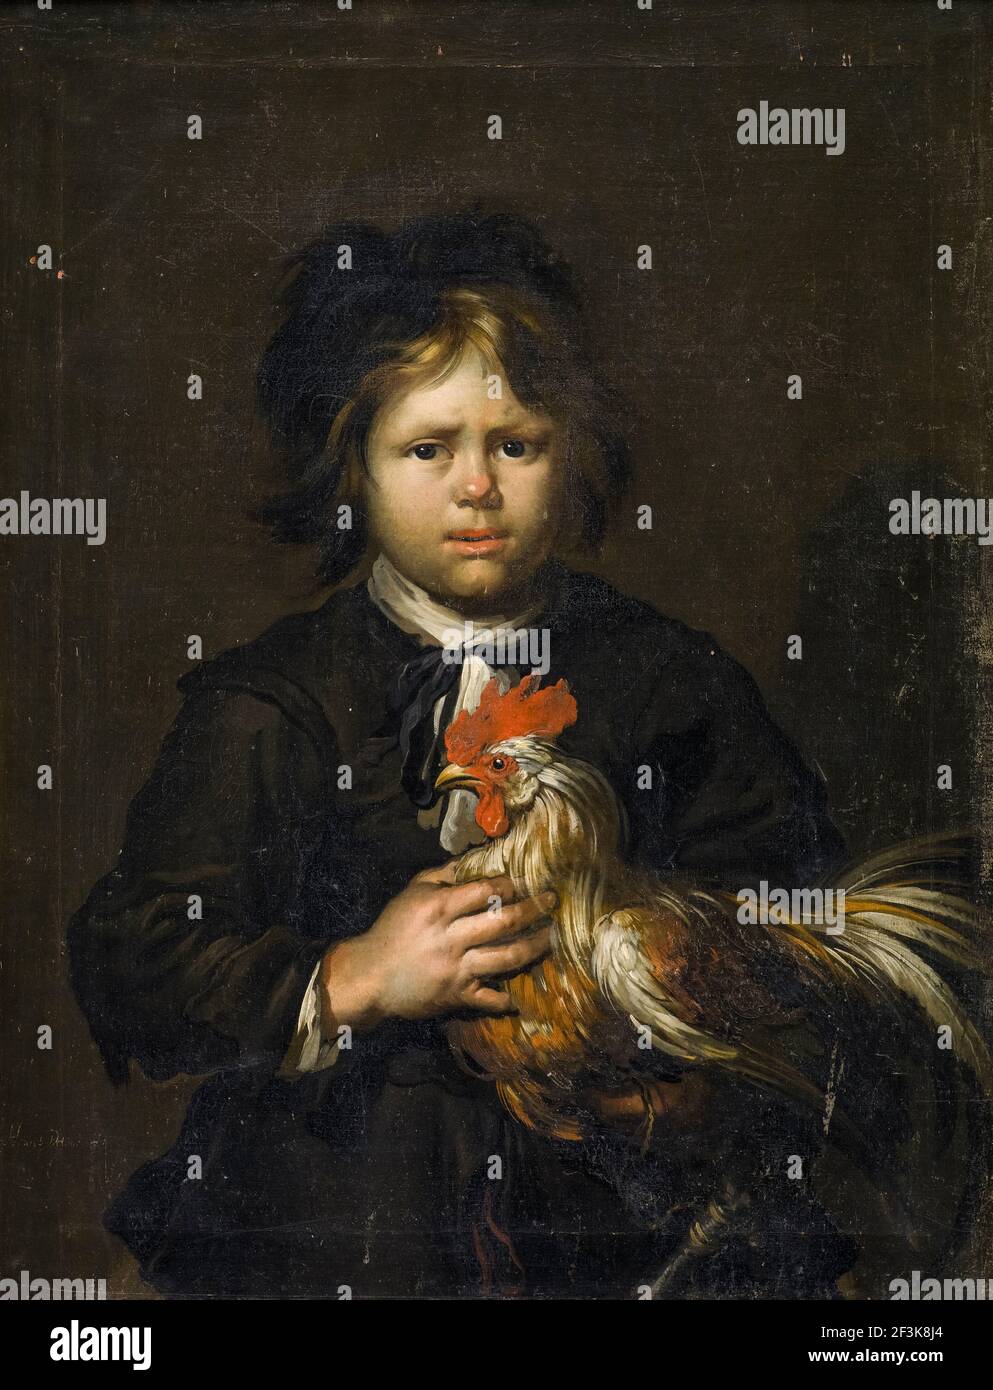 Carl Bloch, En fisker på en loggia (boy with cockerel), portrait painting, 1860 Stock Photo